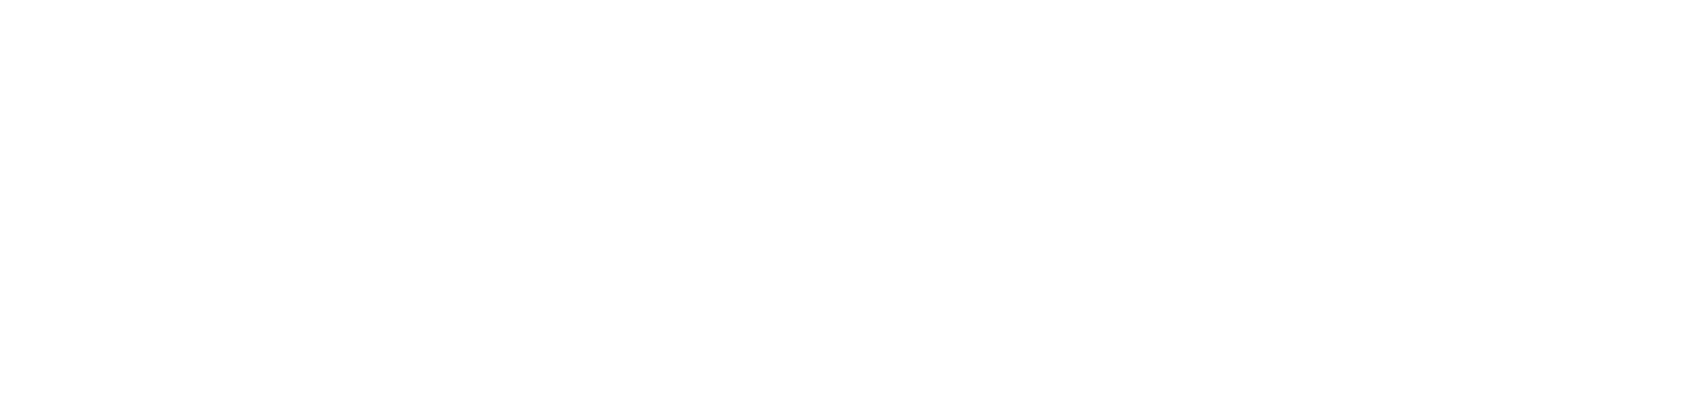 SpinServers.com